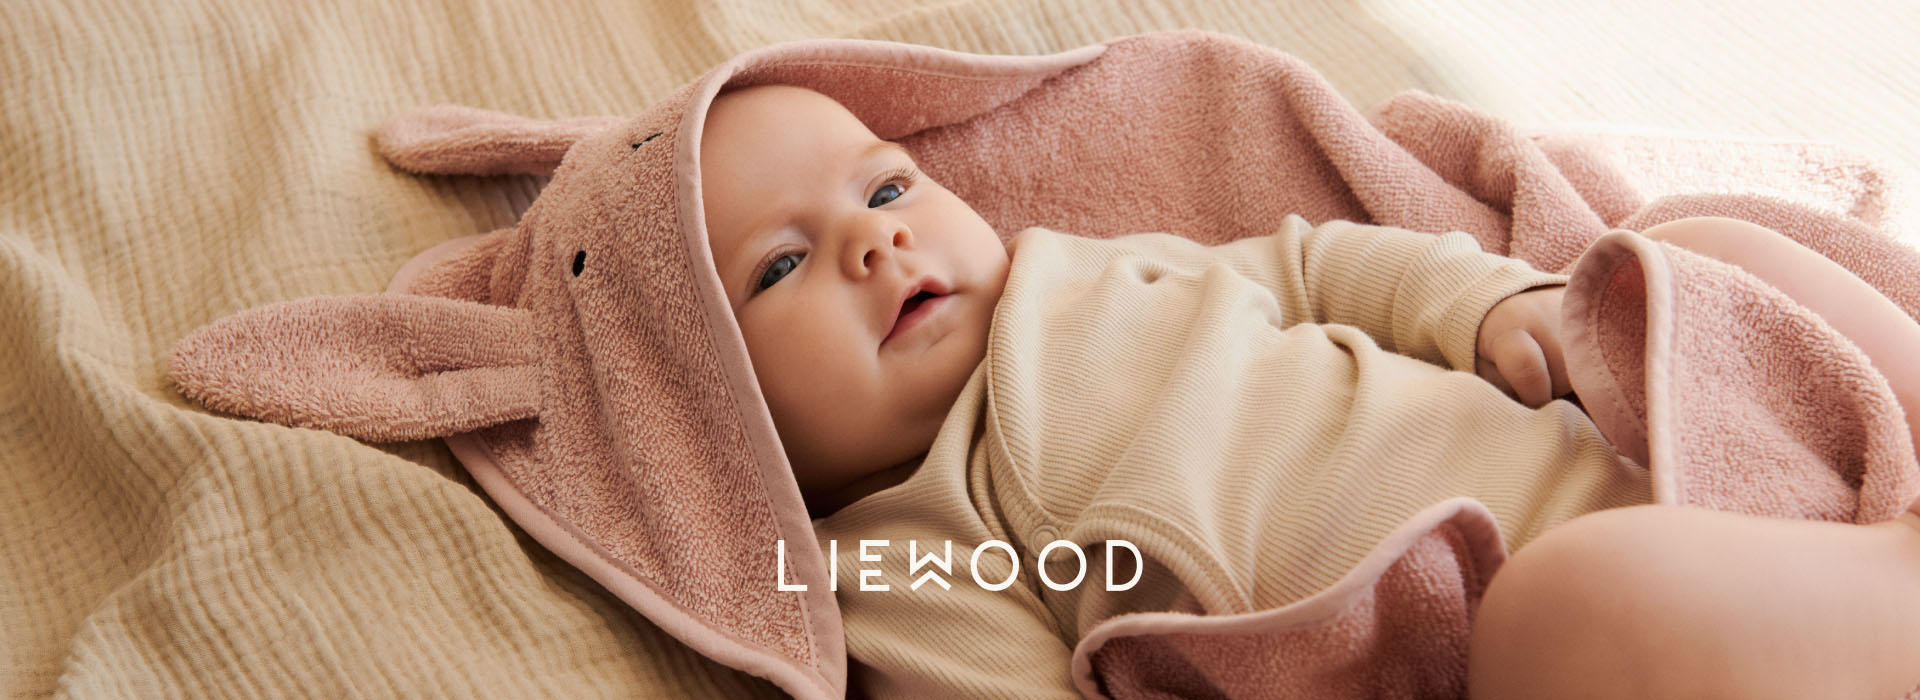 Liewood-header-1920x700.jpg